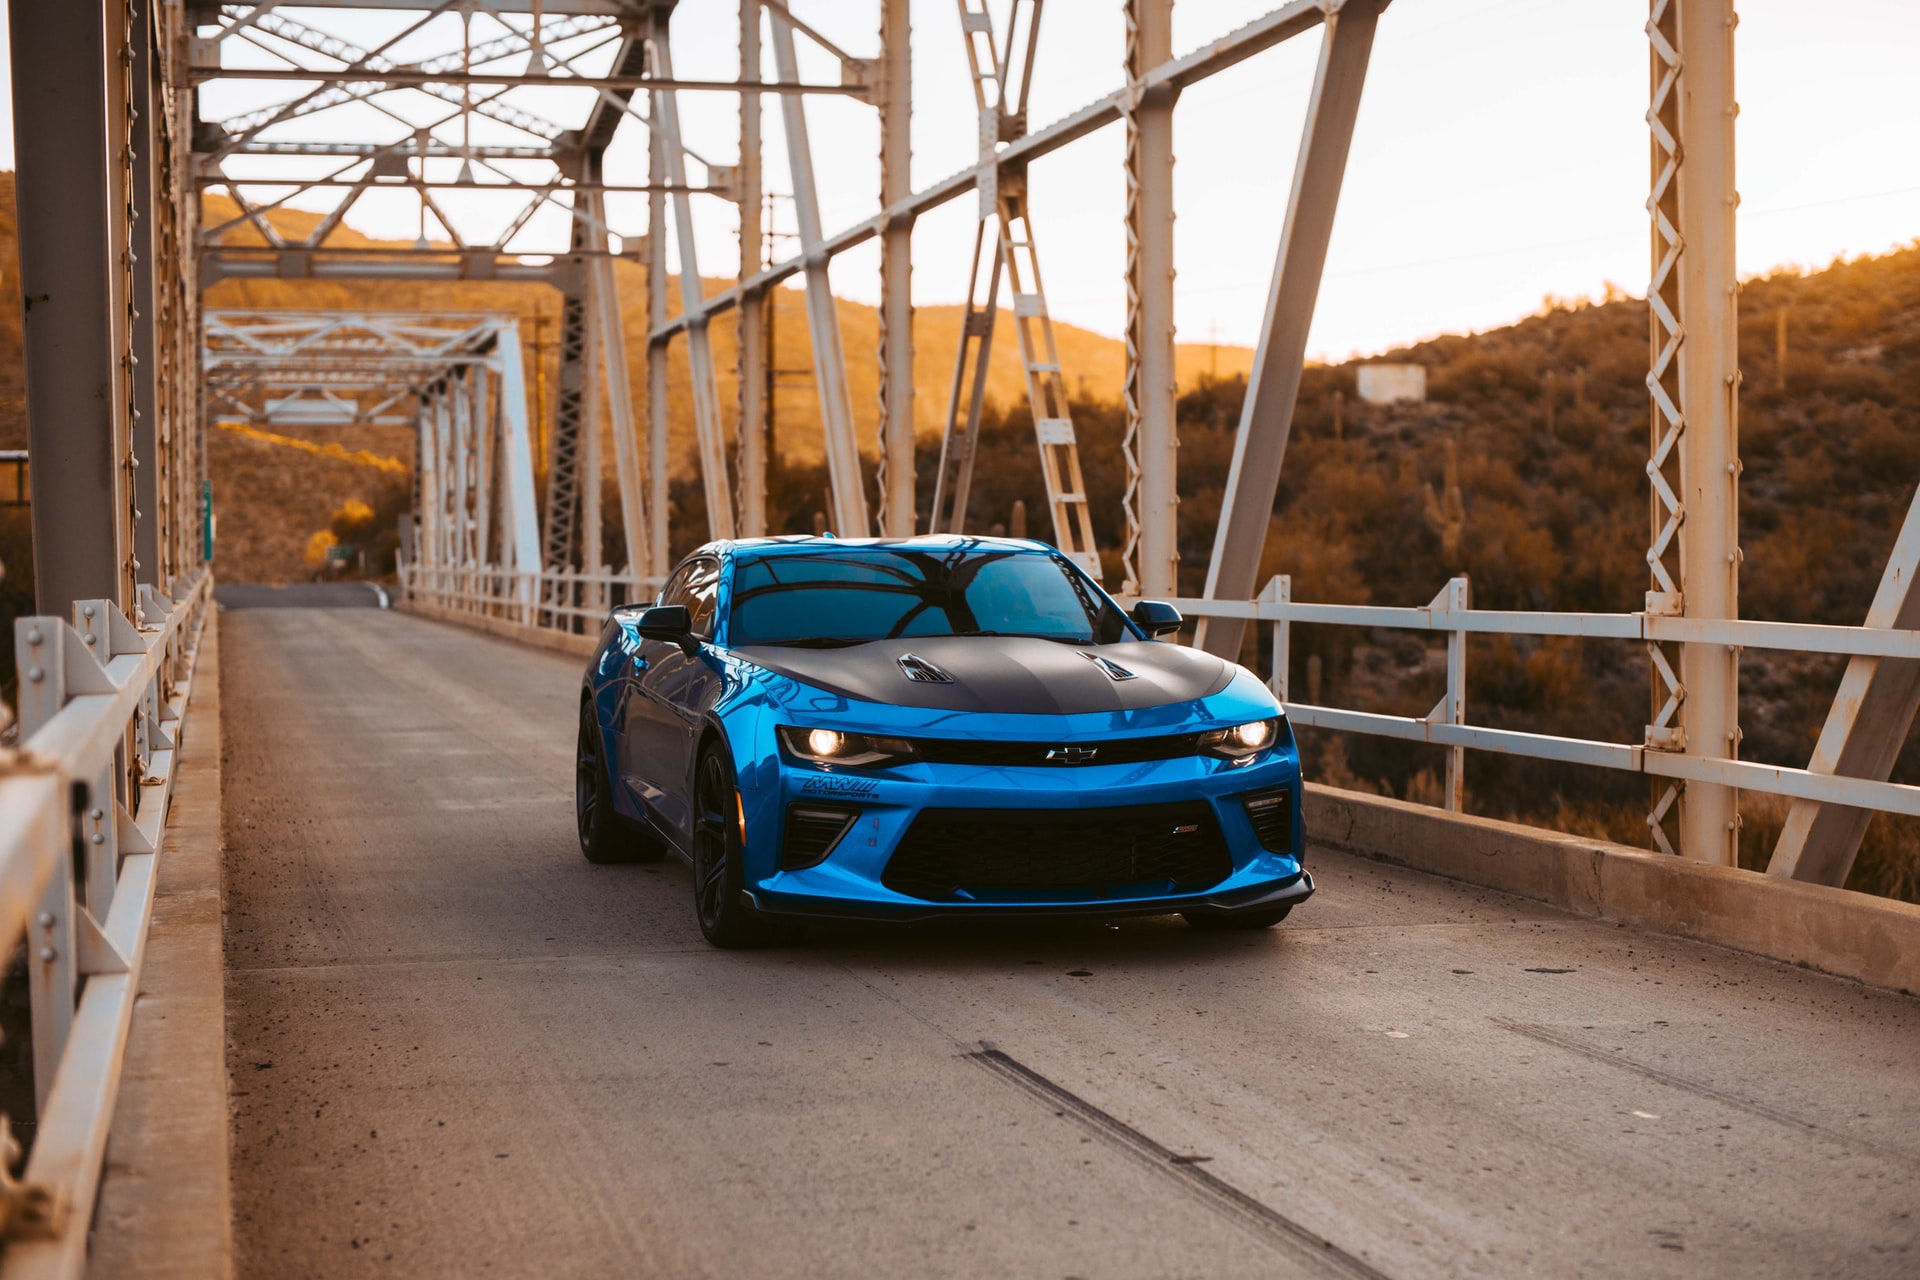 Blue Chevrolet Camaro on the bridge